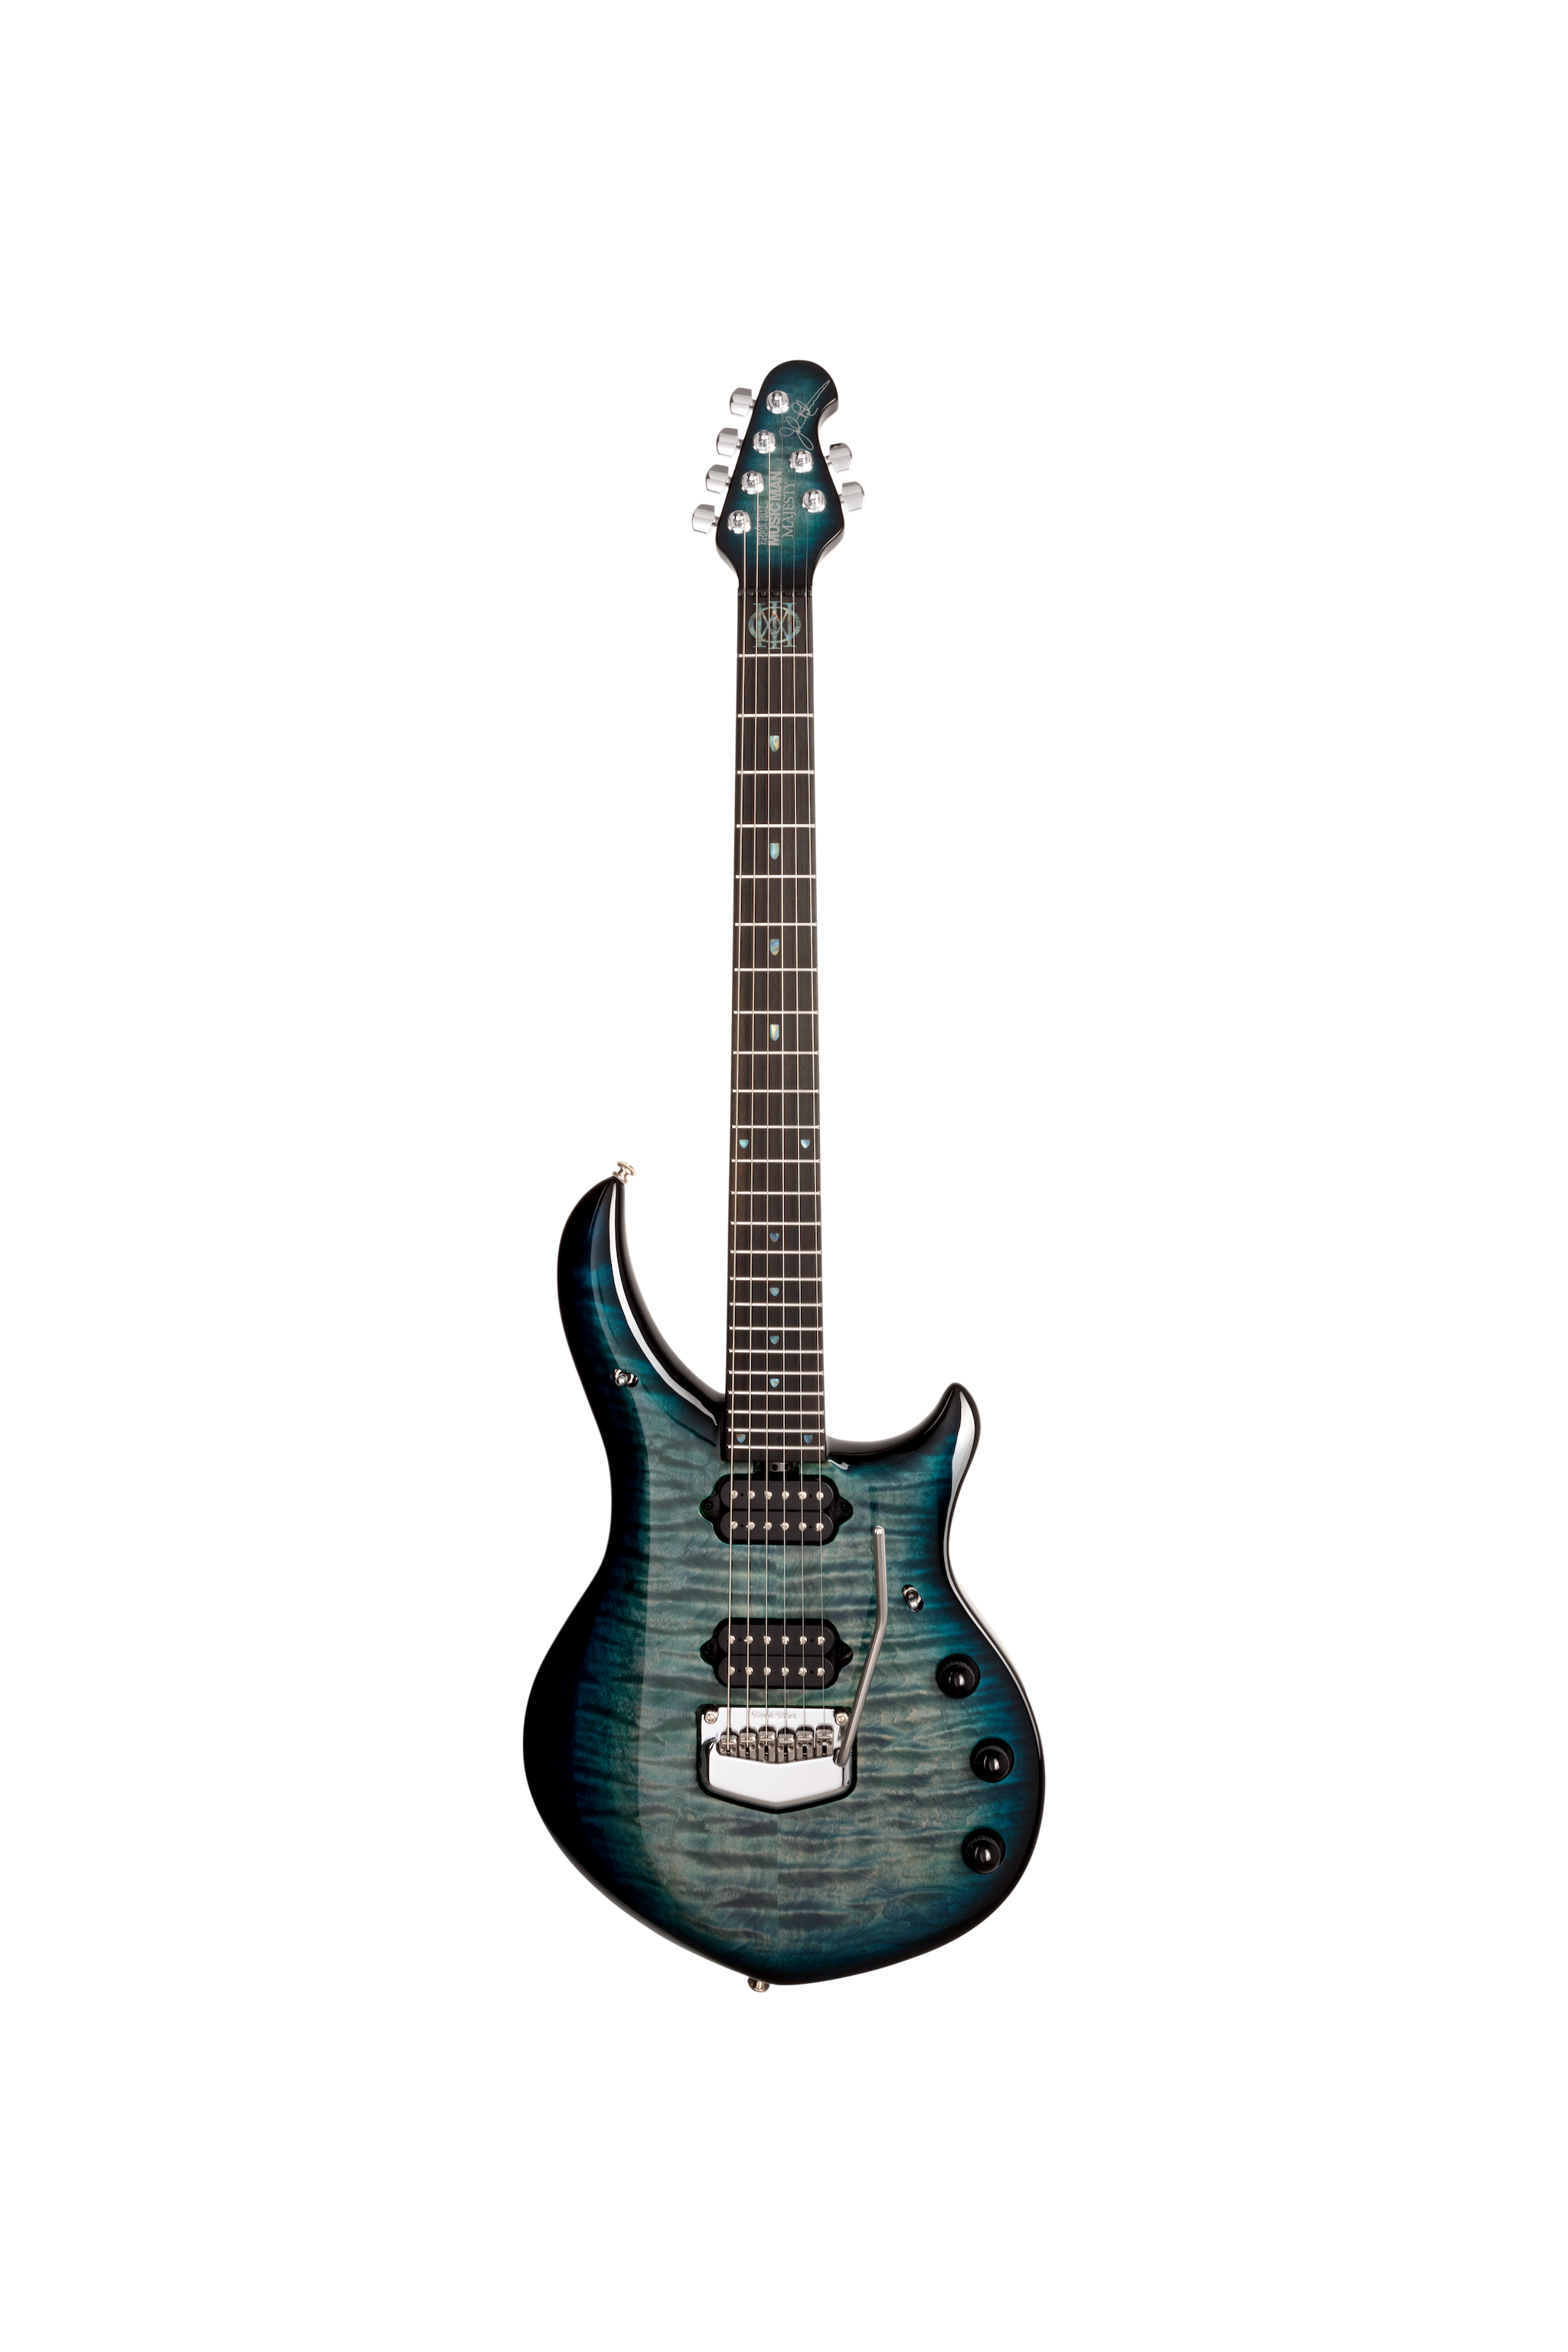 Ernie Ball Music Man John Petrucci Majesty Electric Guitar - Hydrospace with Ebony Fingerboard M014770 - HIENDGUITAR   Musicman GUITAR